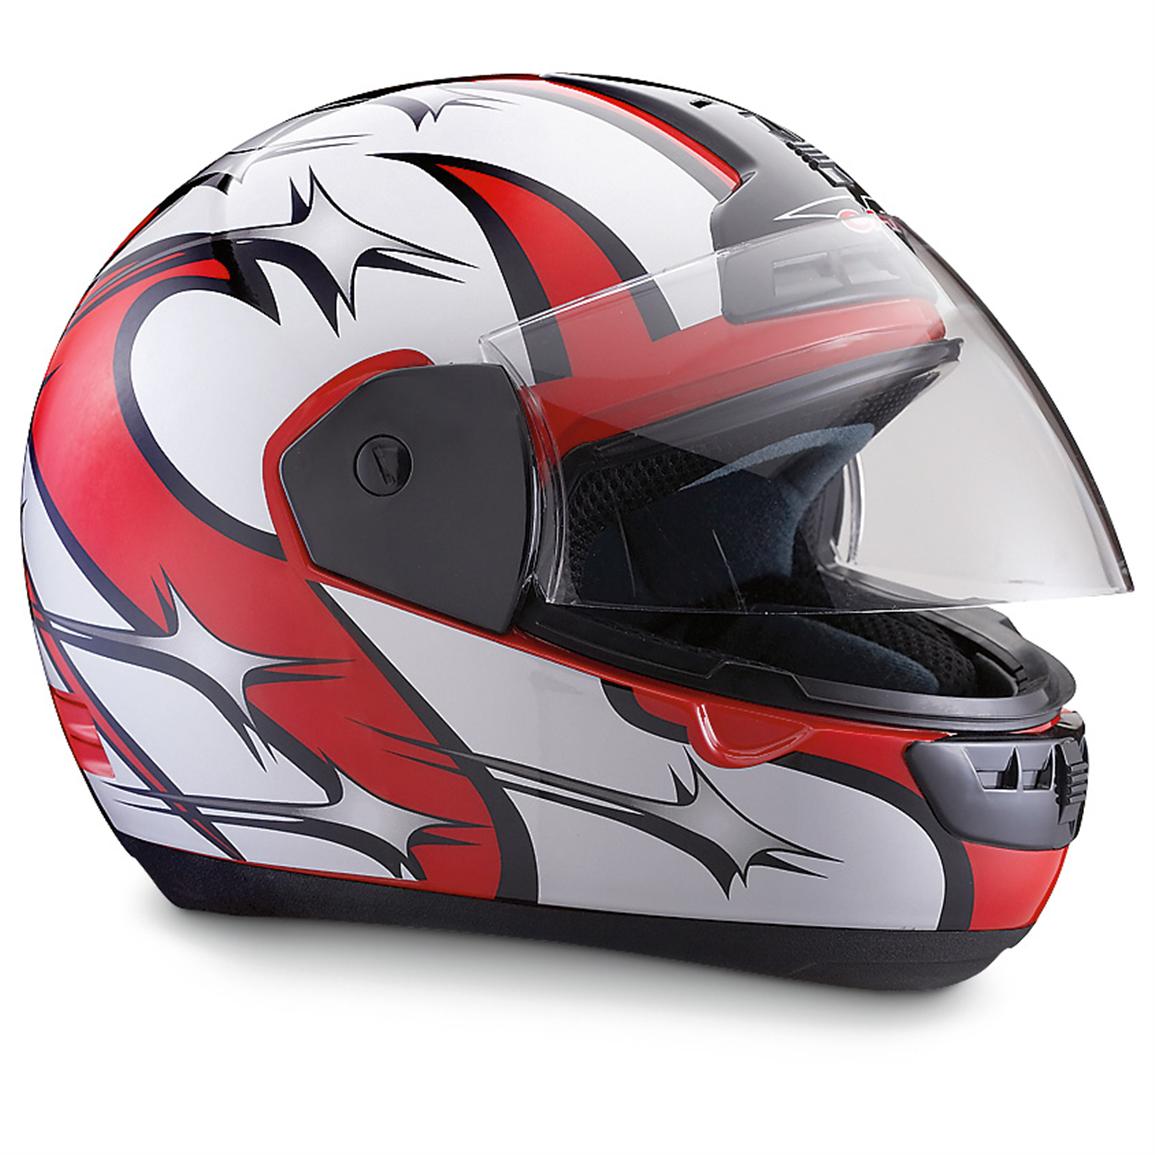 Vulcan® Off - road Helmet - 140210, Helmets & Goggles at Sportsman's Guide